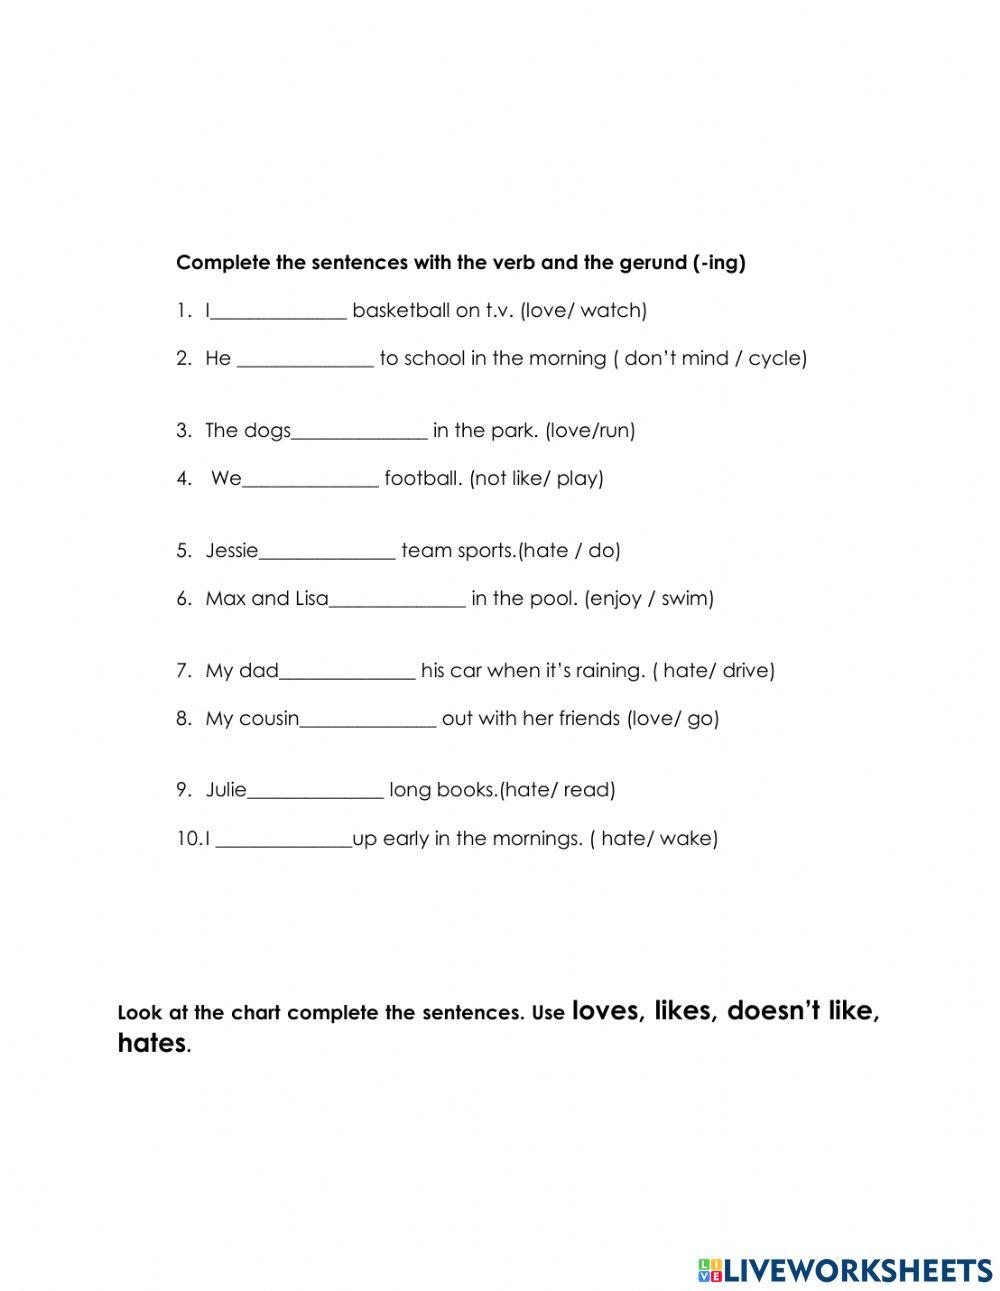 Piv grammar evaluation u3